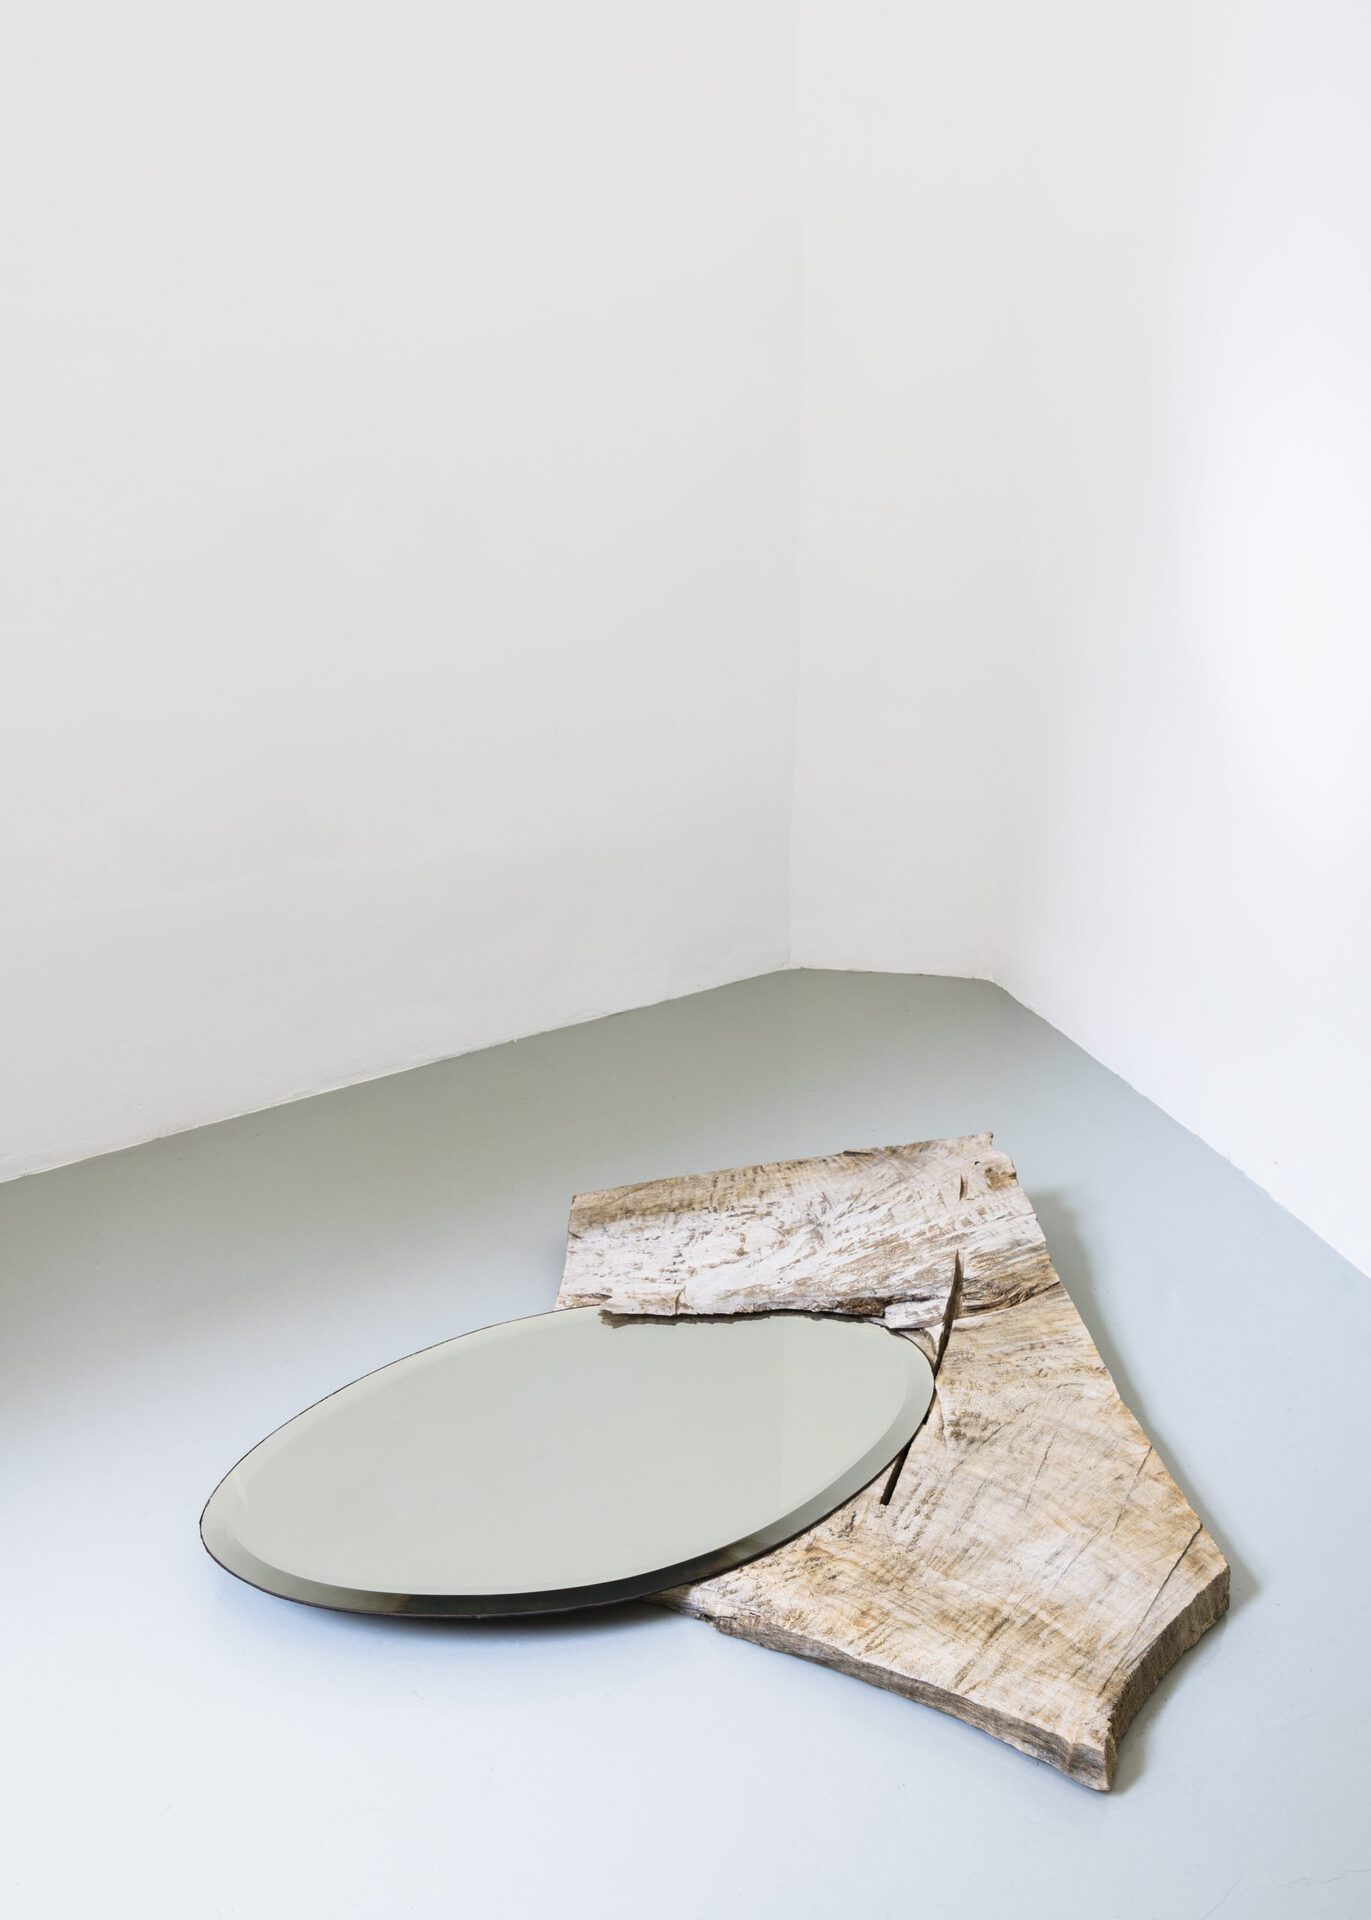 Bernhard Walter, ›Psyche‹, poplar wood and mirror, approx. 100 x 100 x 6 cm, 2021